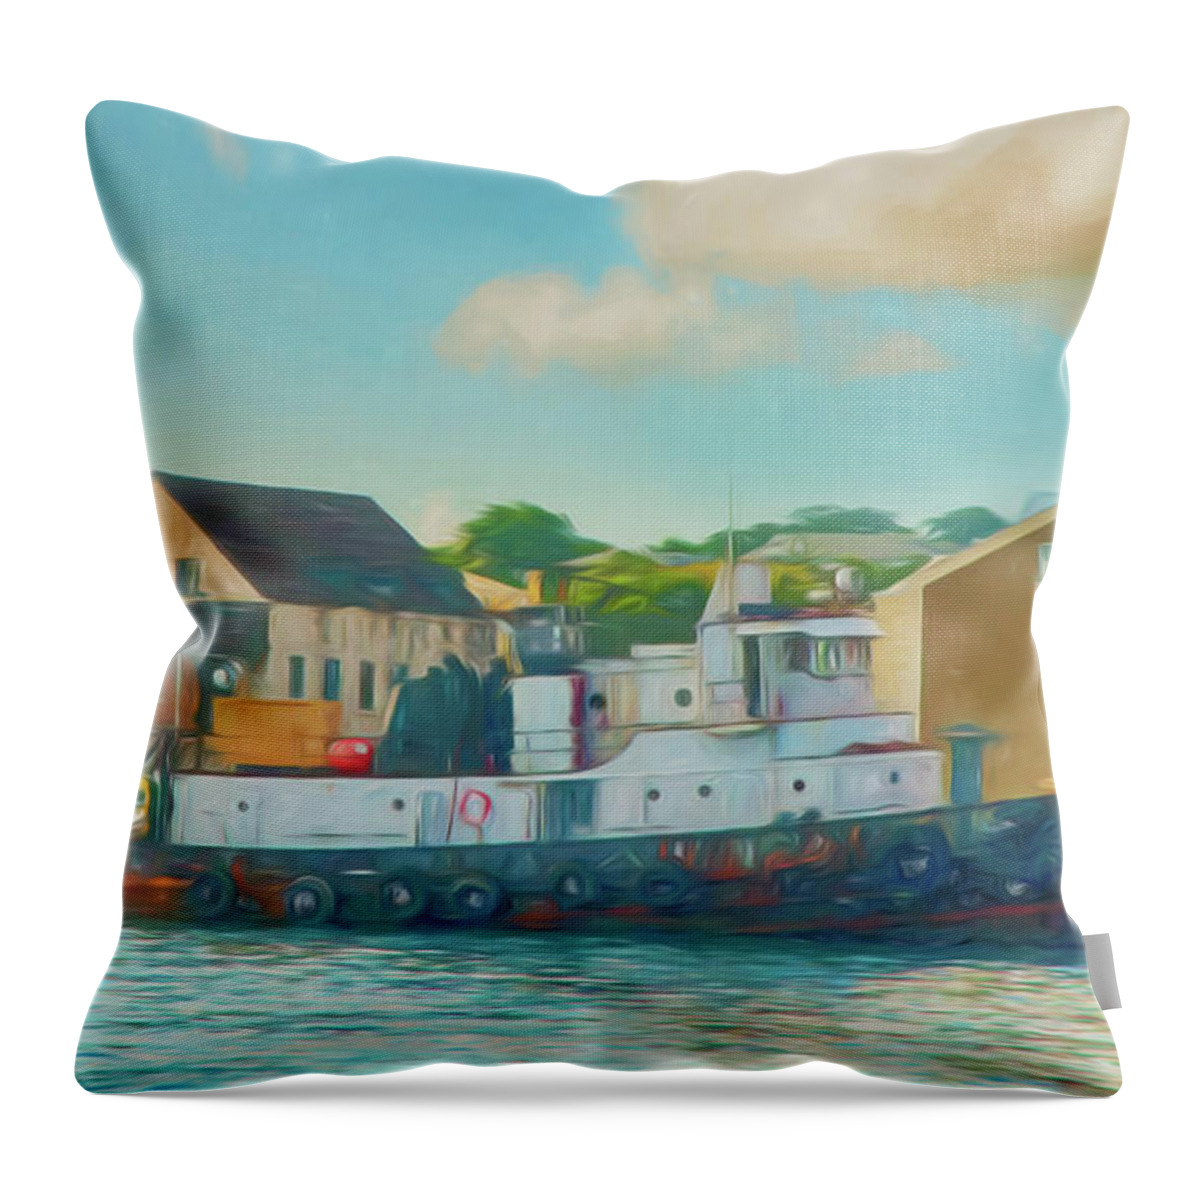 Nassau Throw Pillow featuring the photograph Nassau Tug by Mick Burkey